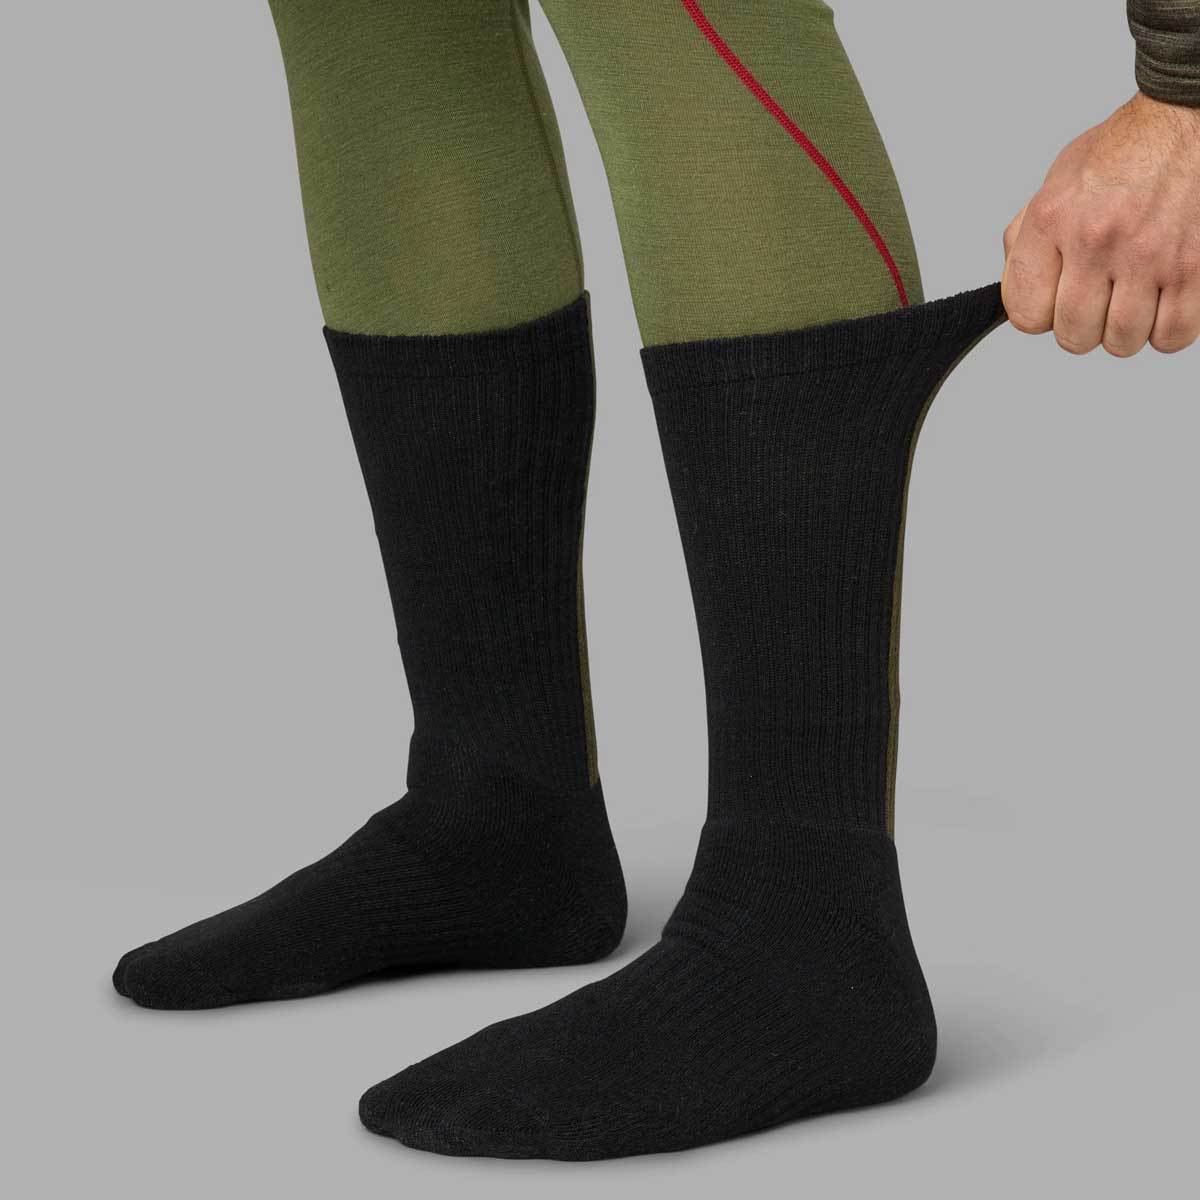 Seeland Moor Socks 3 Pack - Black/Green